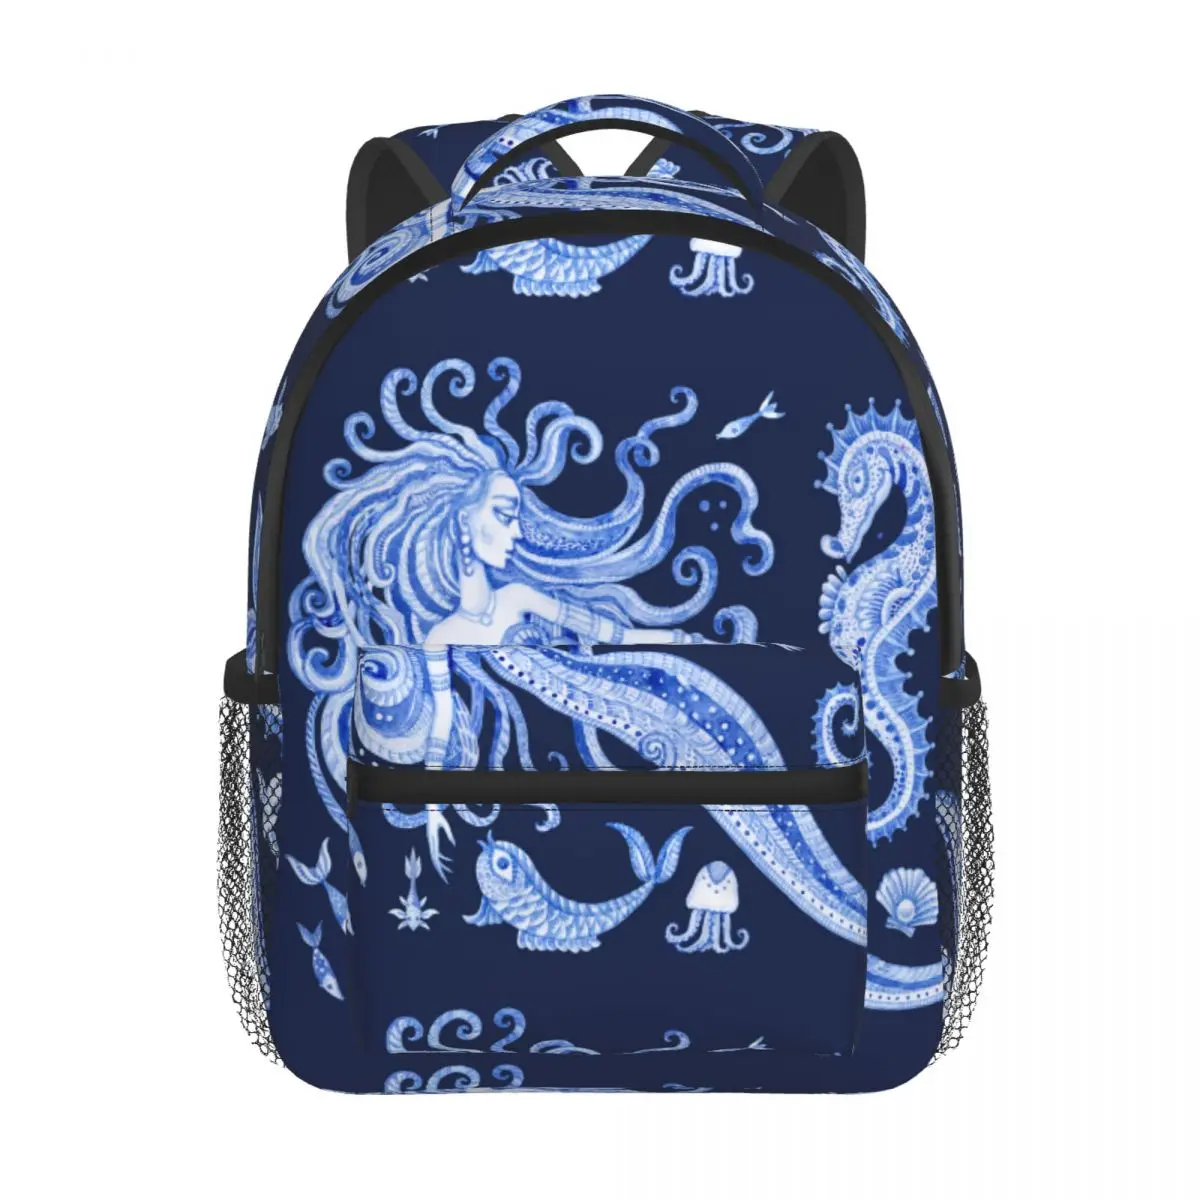 Fairy Tale Sea Animals And Mermaid Kids Backpack Toddler School Bag Kindergarten Mochila for Boys Girls 2-5 Years